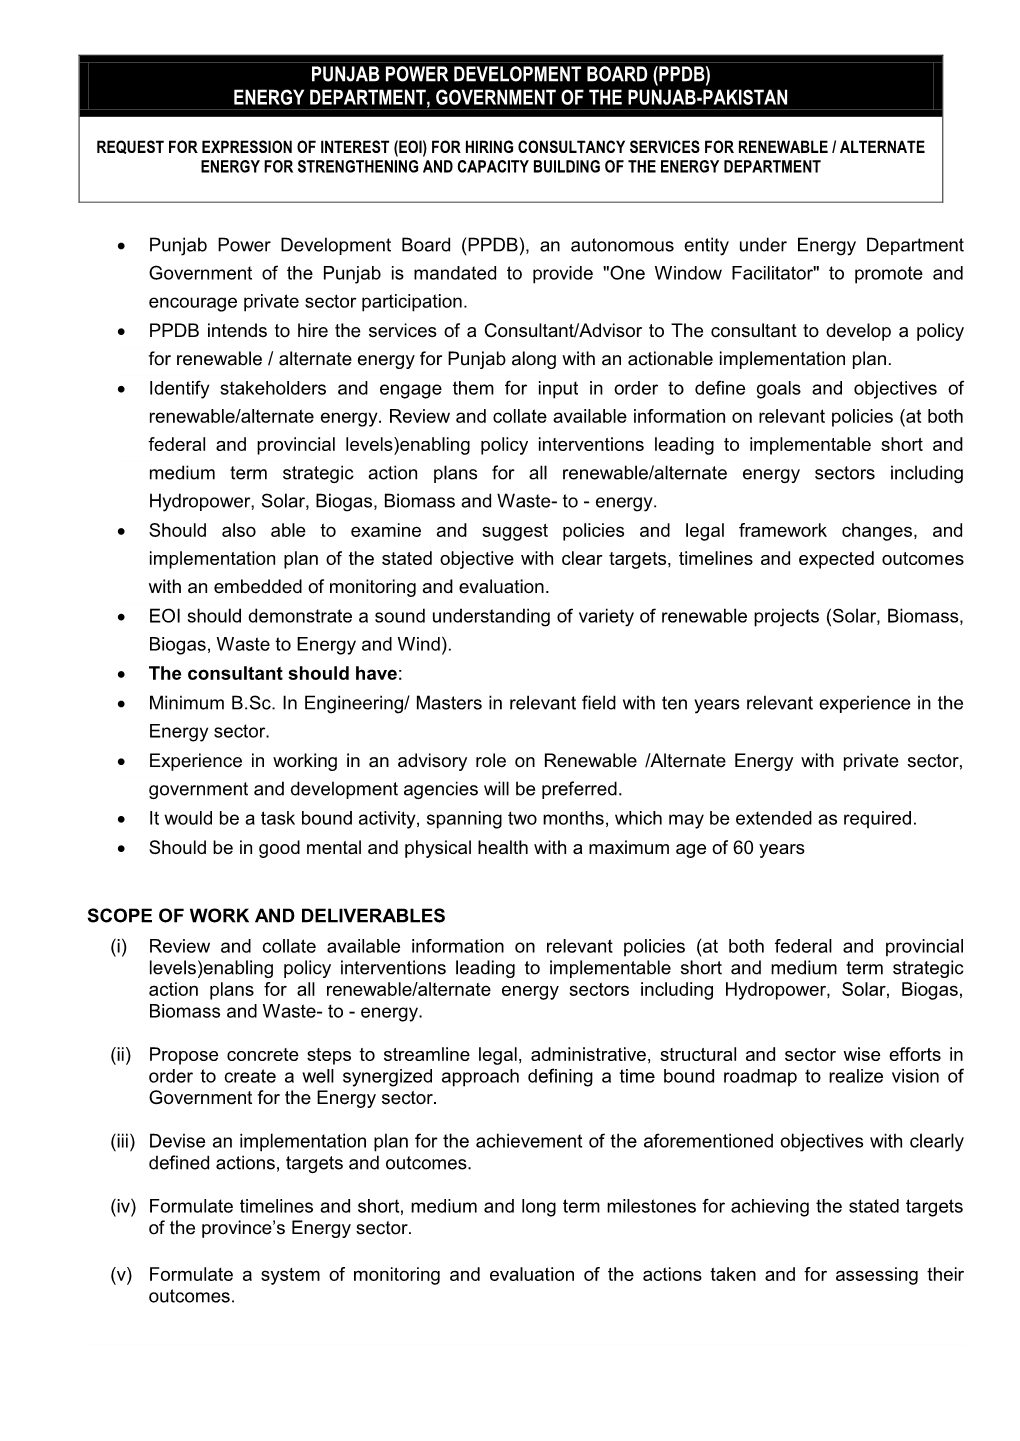 Punjab Power Development Board (Ppdb) Energy Department, Government of the Punjab-Pakistan